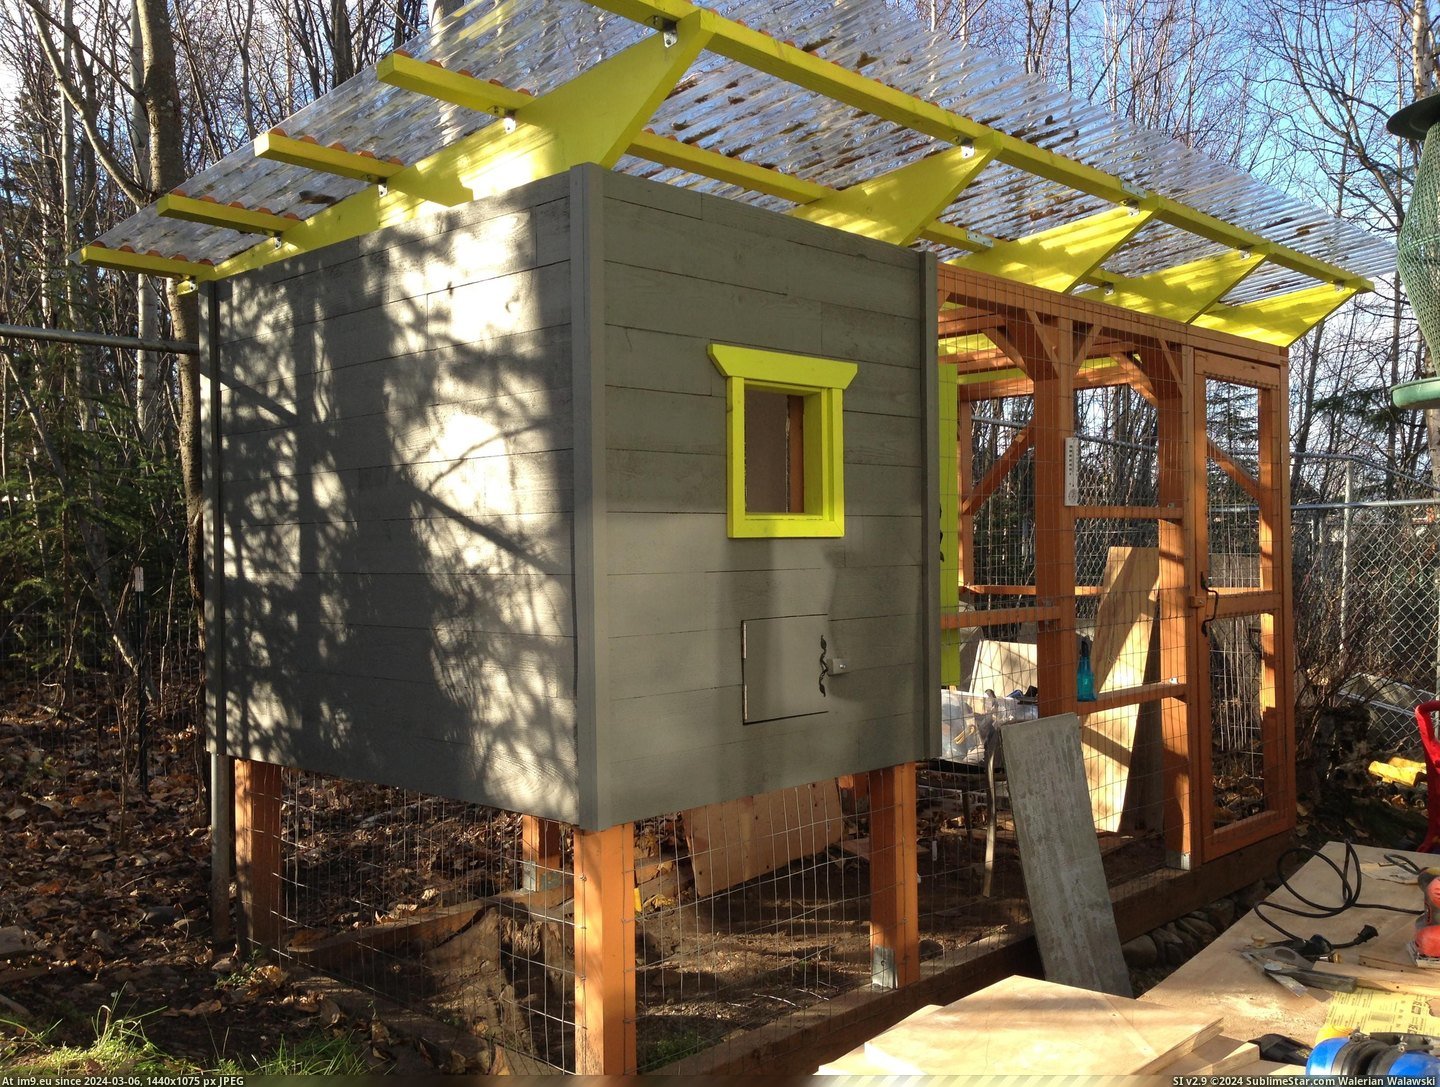 #Share #Thought #Chicken #Coop #Built #Alaska [Pics] I built a chicken coop at my home in Alaska and I thought I'd share 20 Pic. (Obraz z album My r/PICS favs))